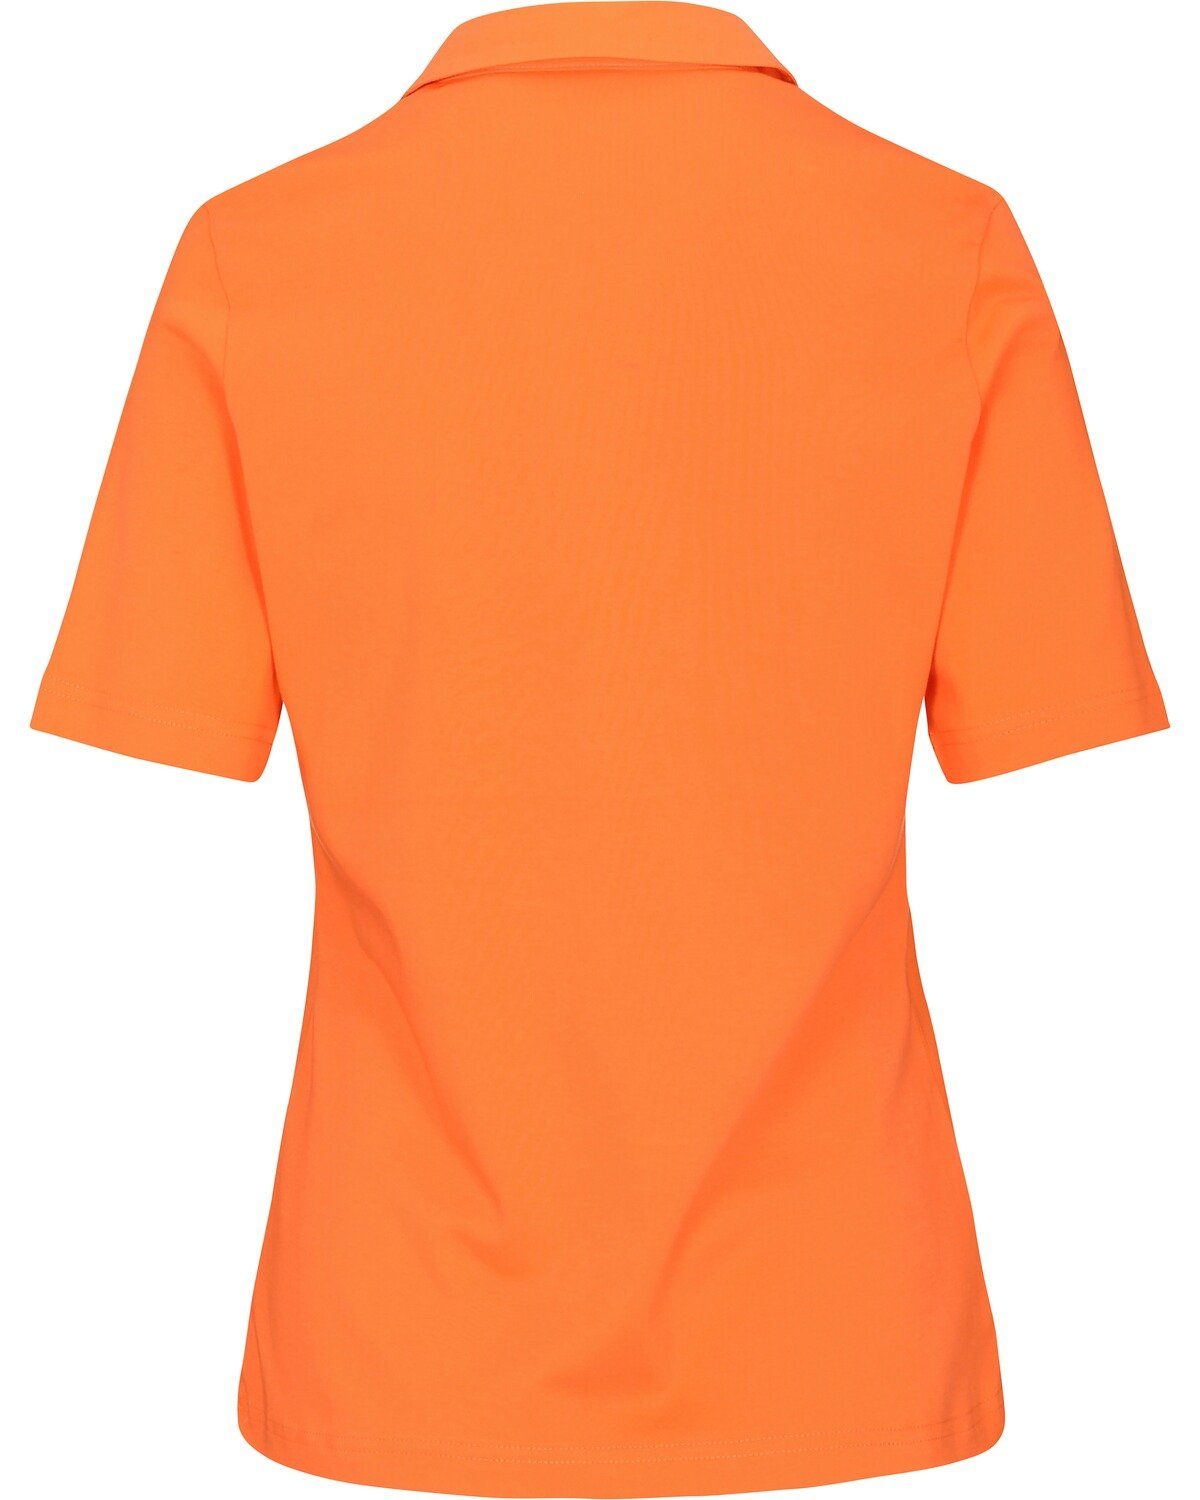 Poloshirt Clarina Orange Poloshirt